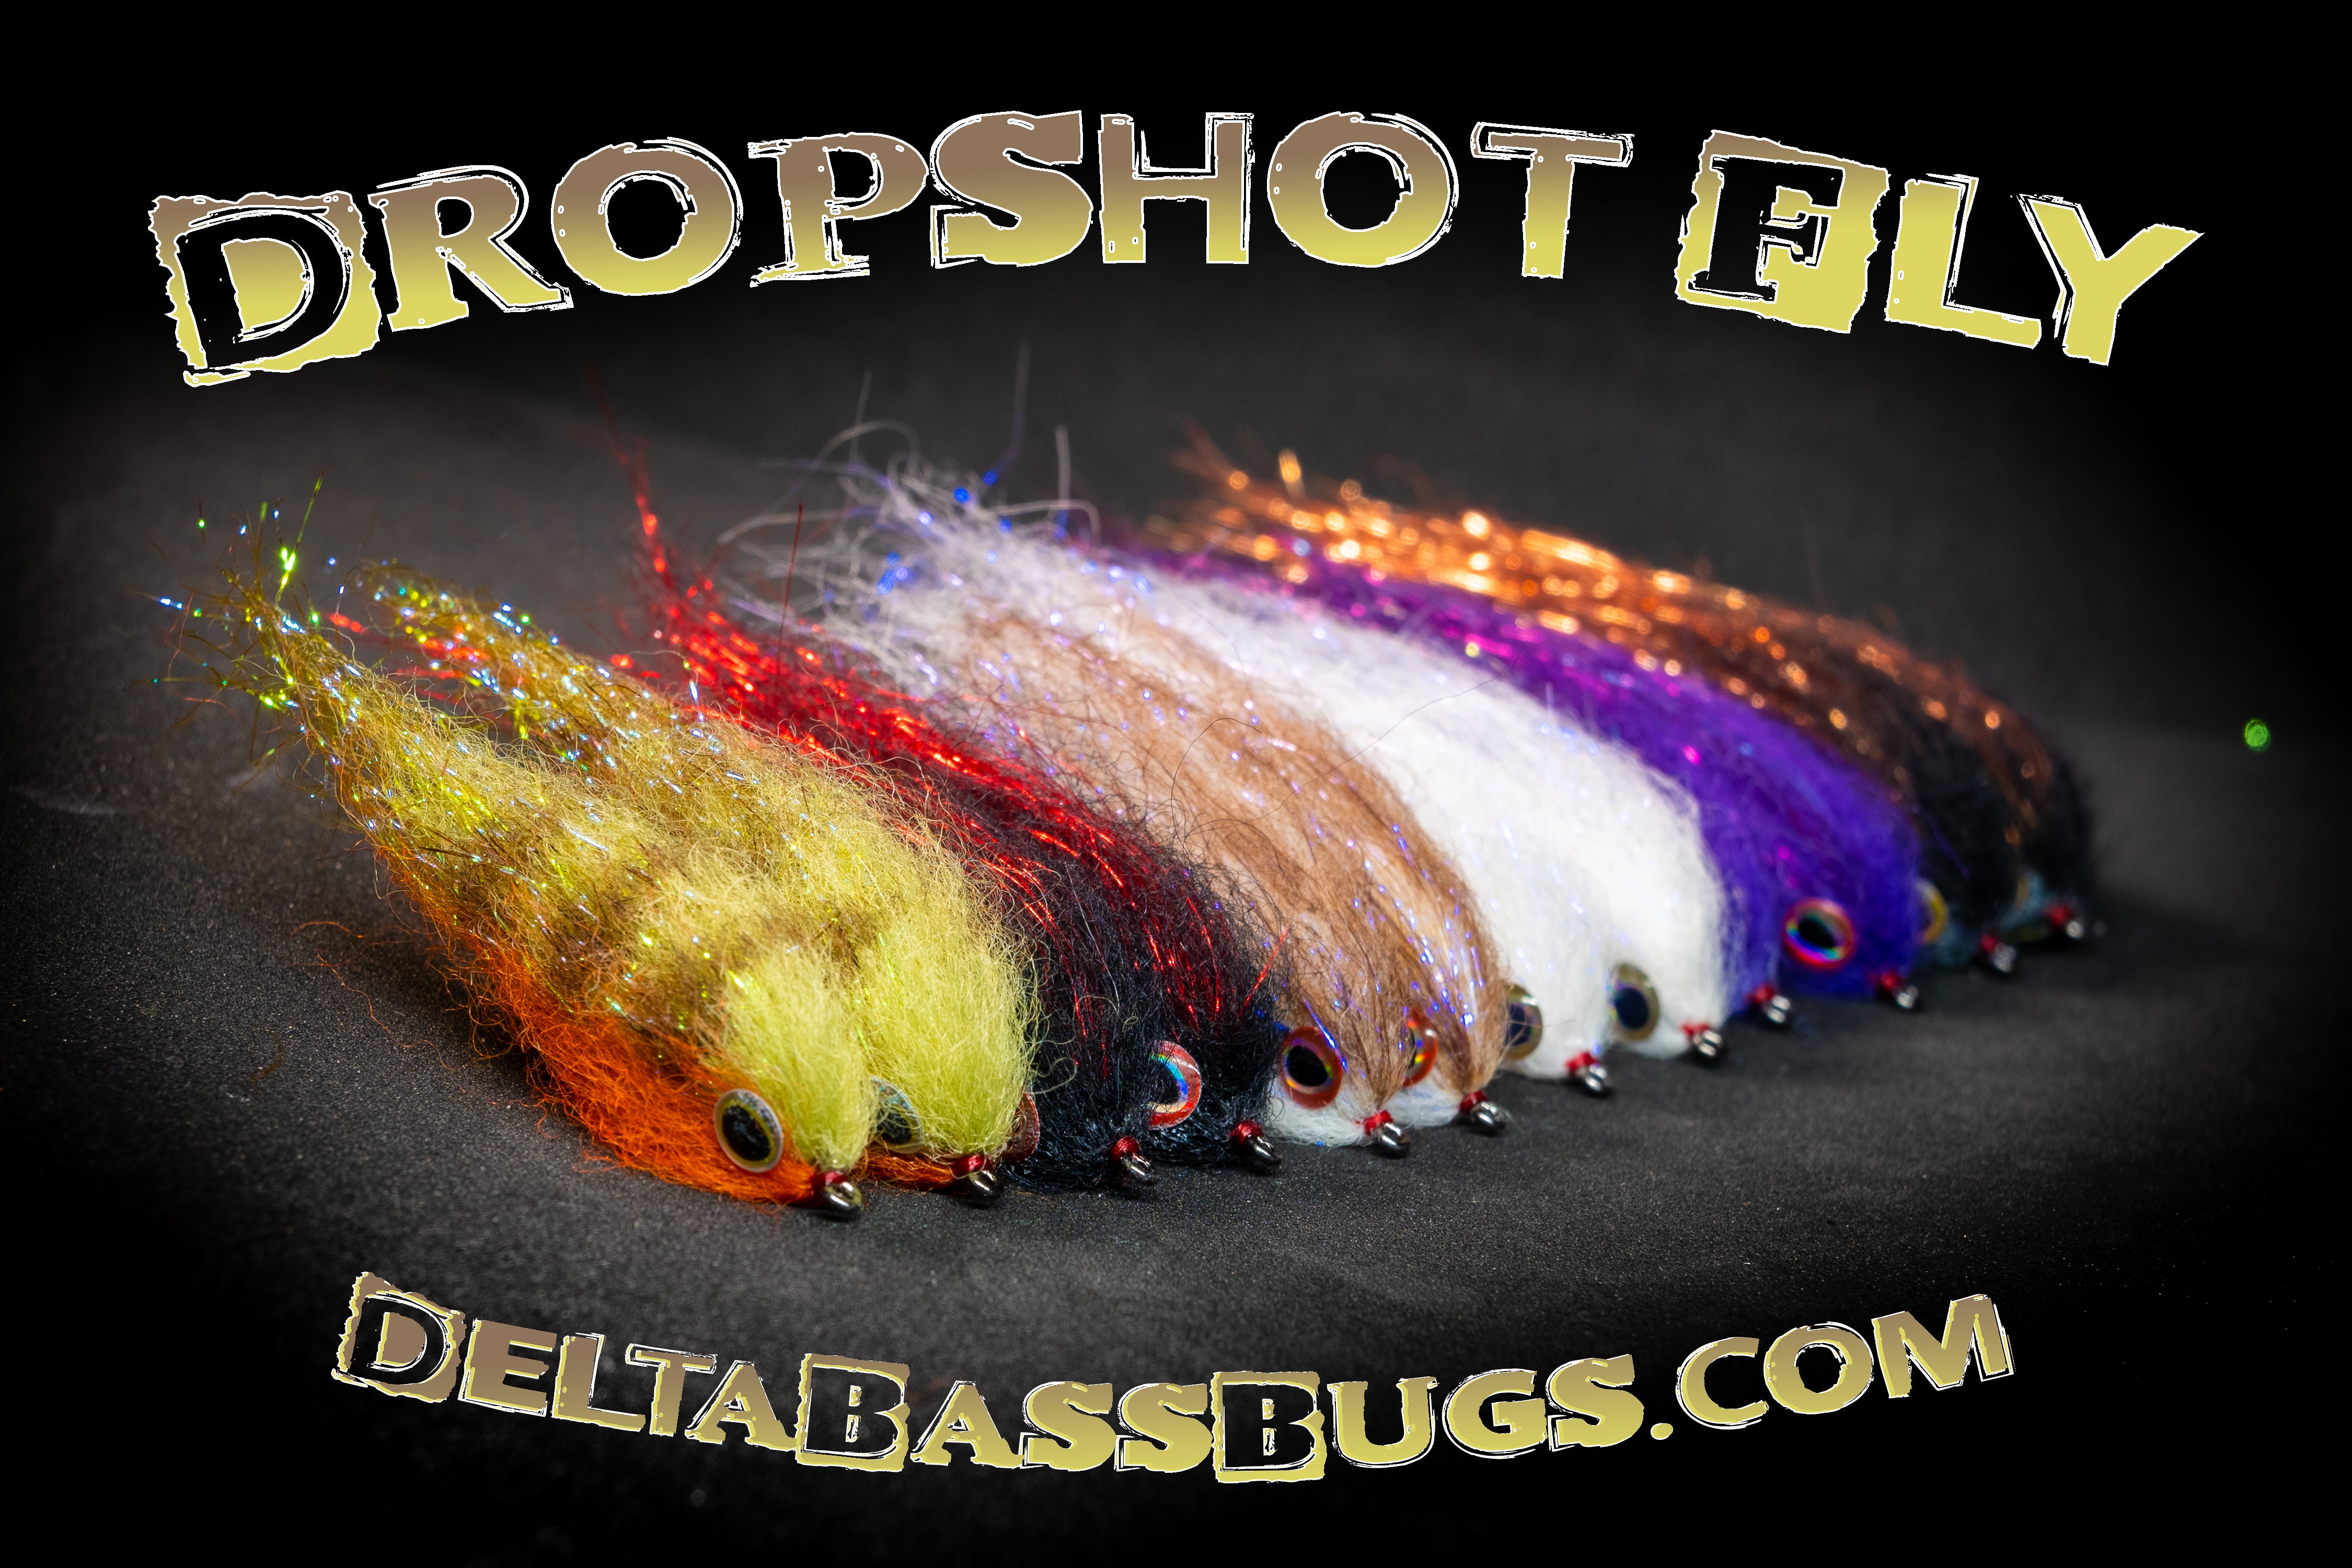 Dropshot fly – Delta Bass Bugs